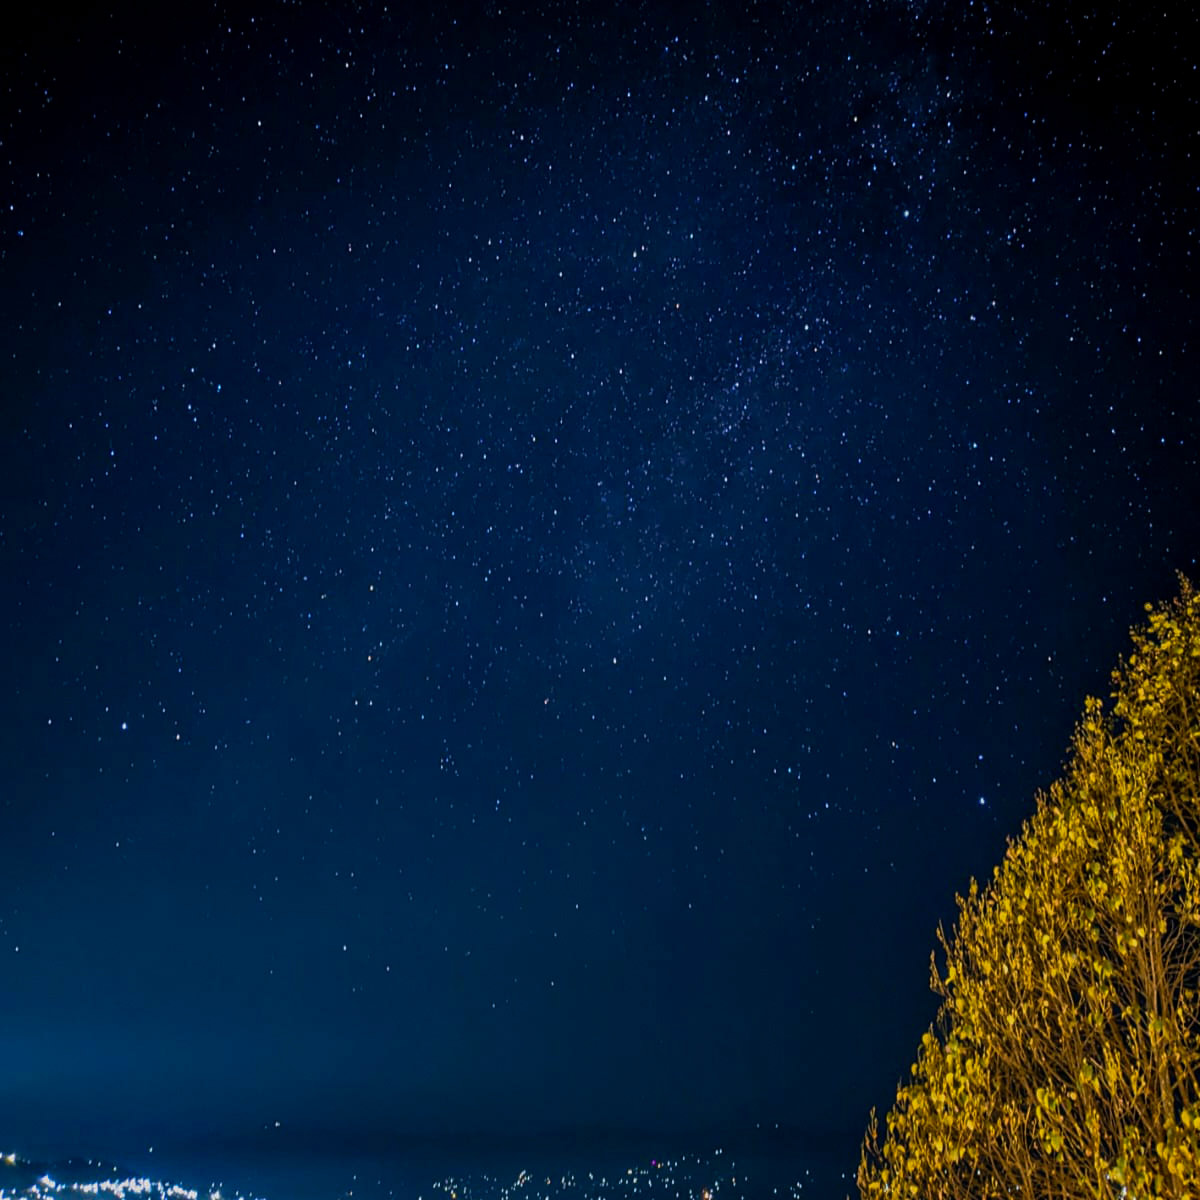 The night sky as seen from The Oak Retreat